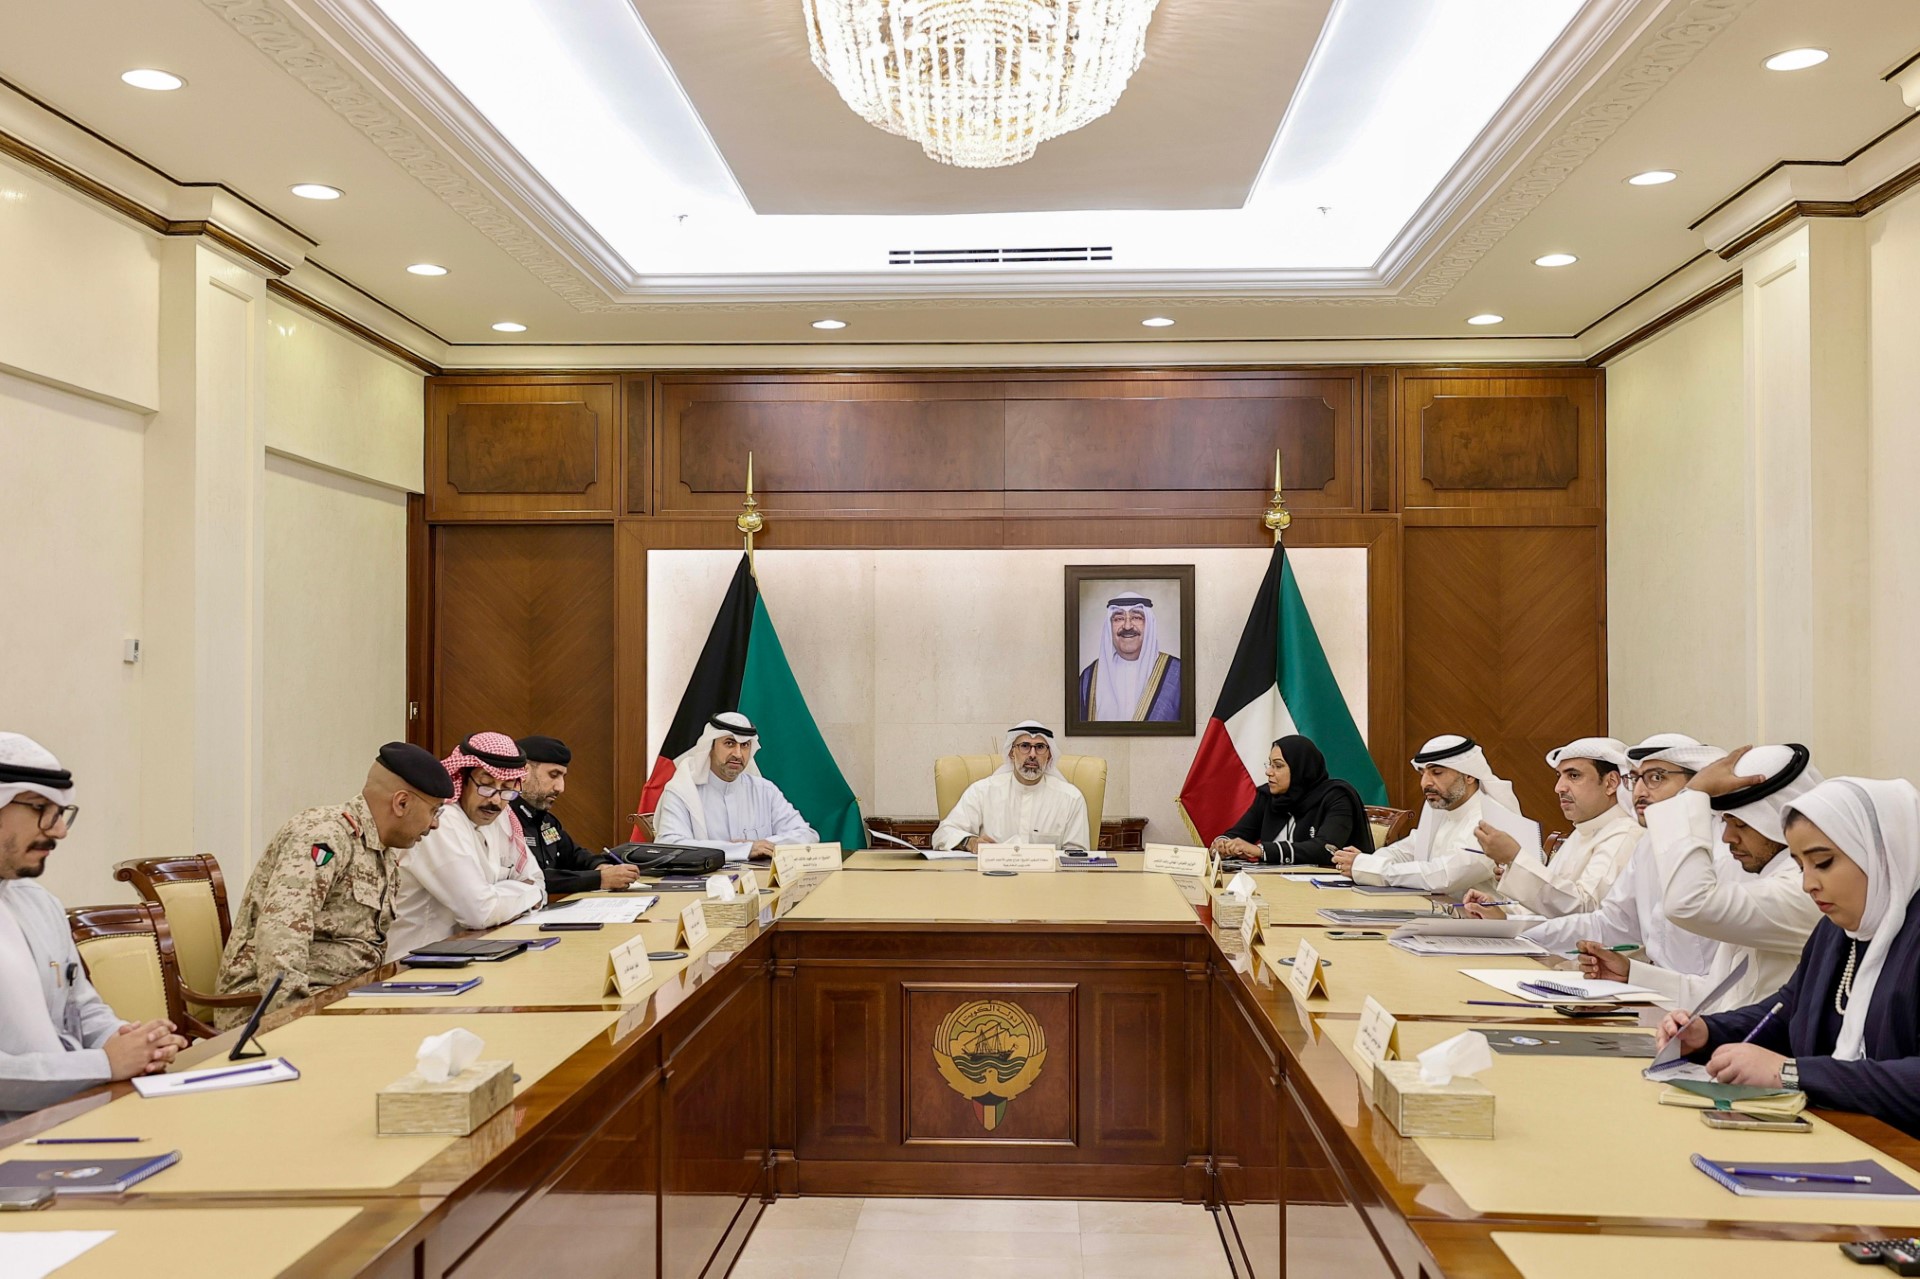 Kuwaiti Deputy Foreign Minister Ambassador Sheikh Jarrah Jaber Al-Ahmad Al-Sabah chaired a border demarcation committee meeting